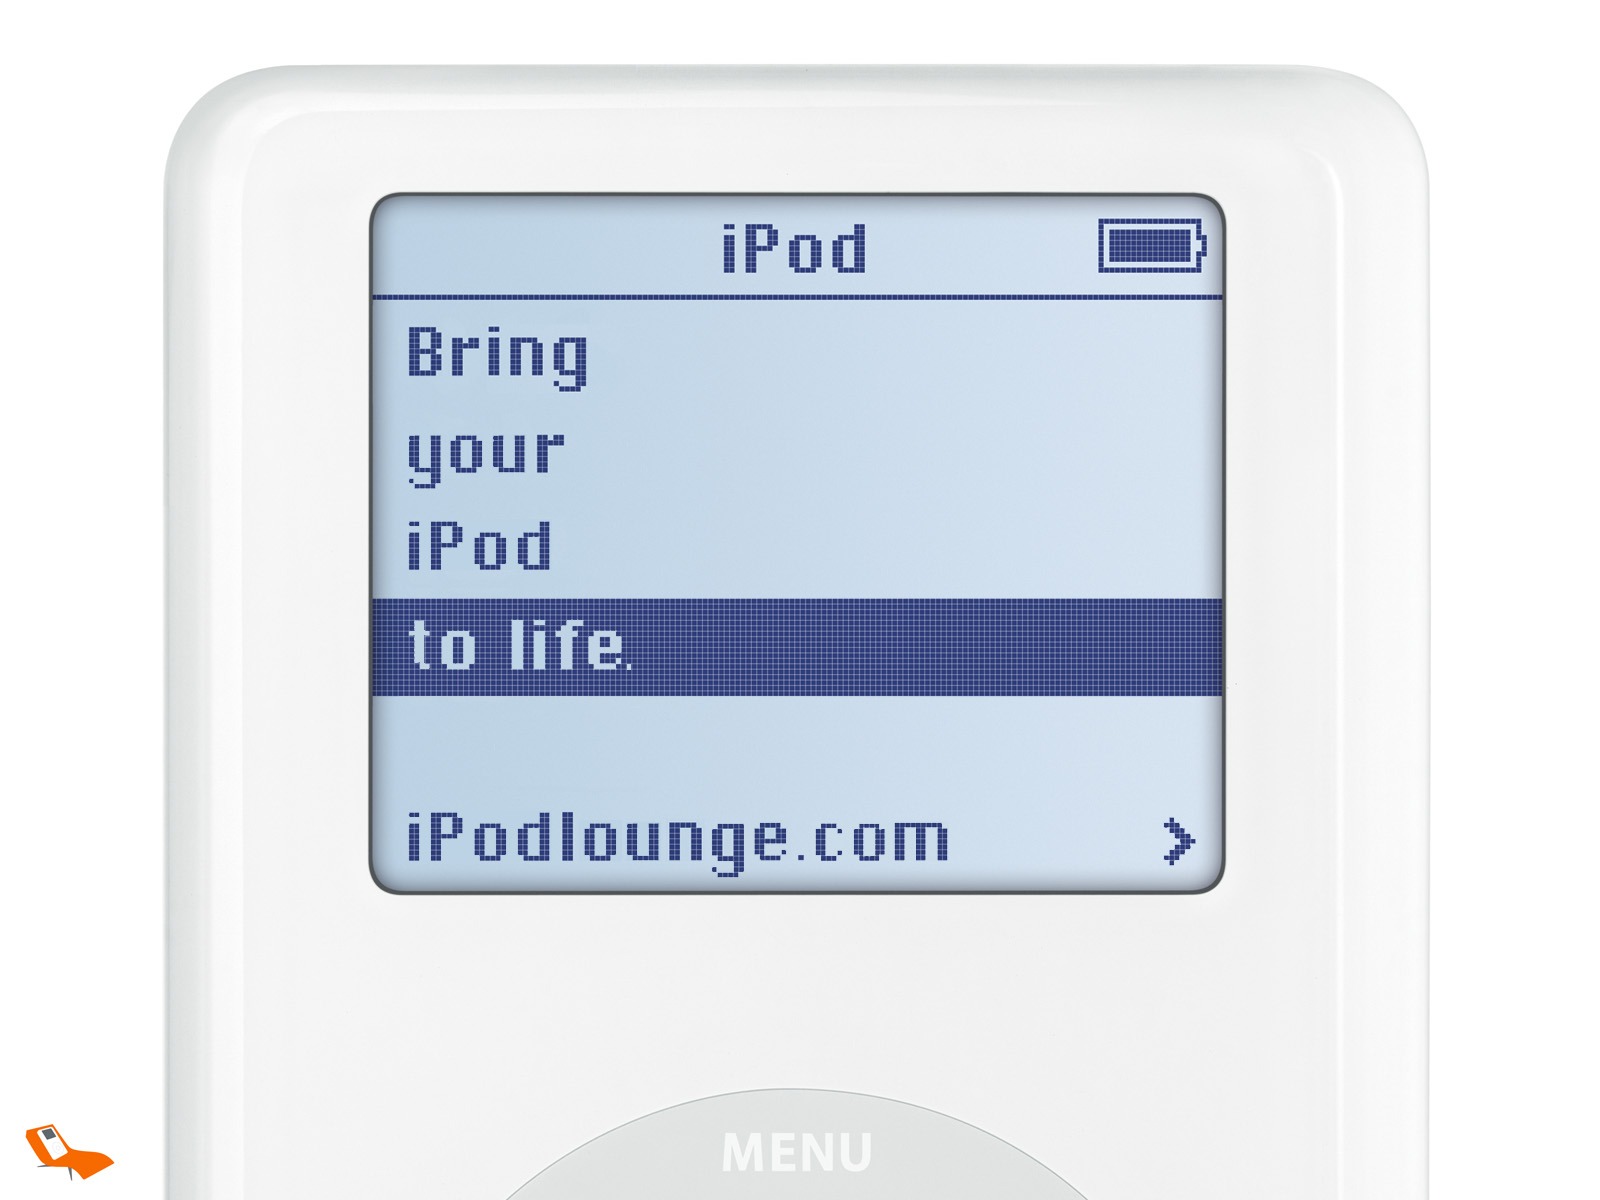 iPod 壁紙(一) #8 - 1600x1200